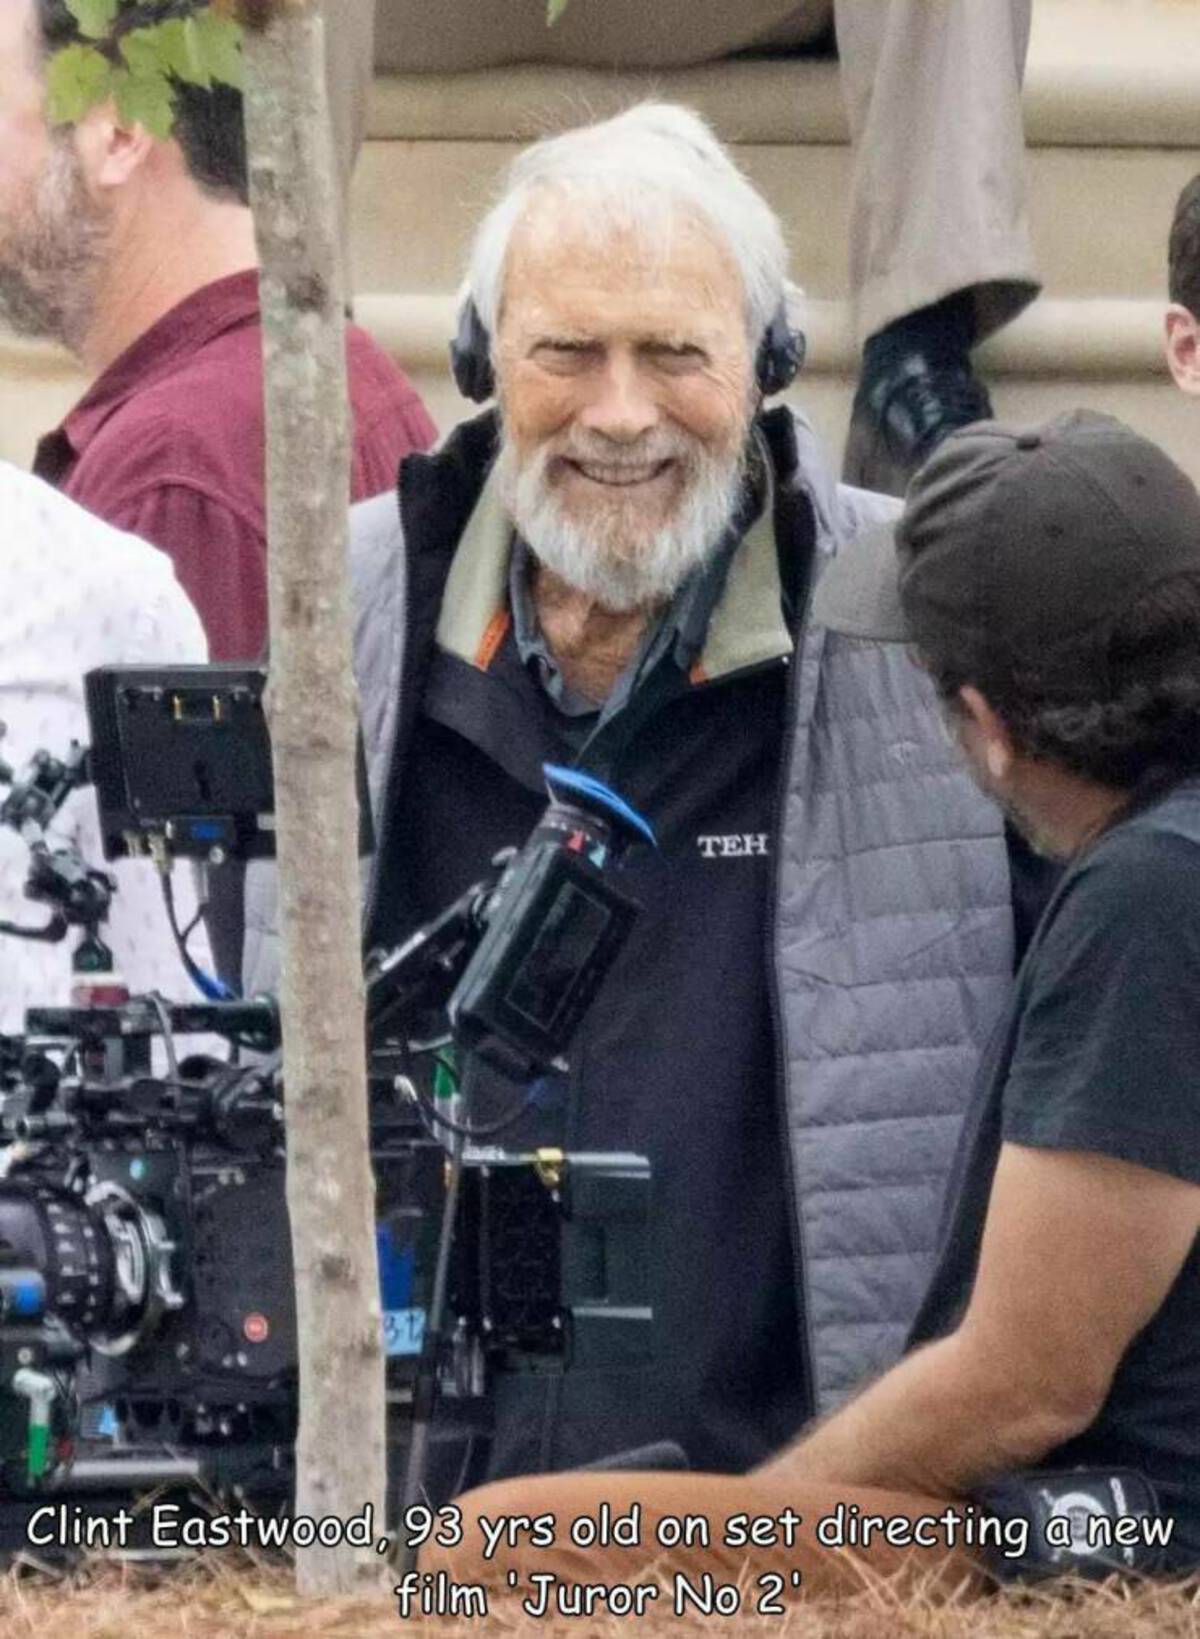 beard - Teh Clint Eastwood, 93 yrs old on set directing a new film 'Juror No 2